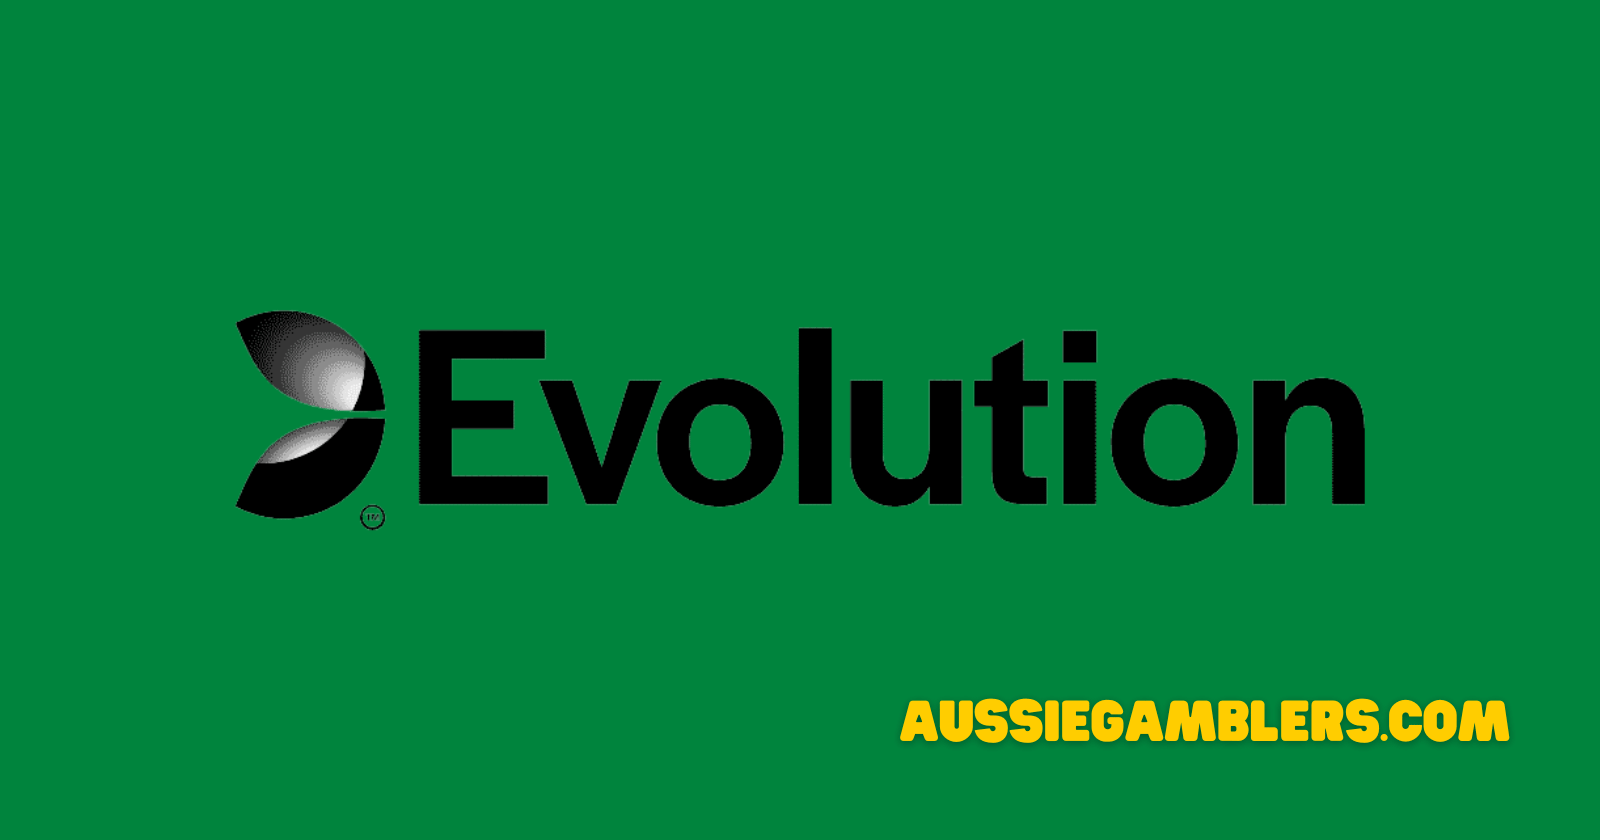 Evolution Gaming banner